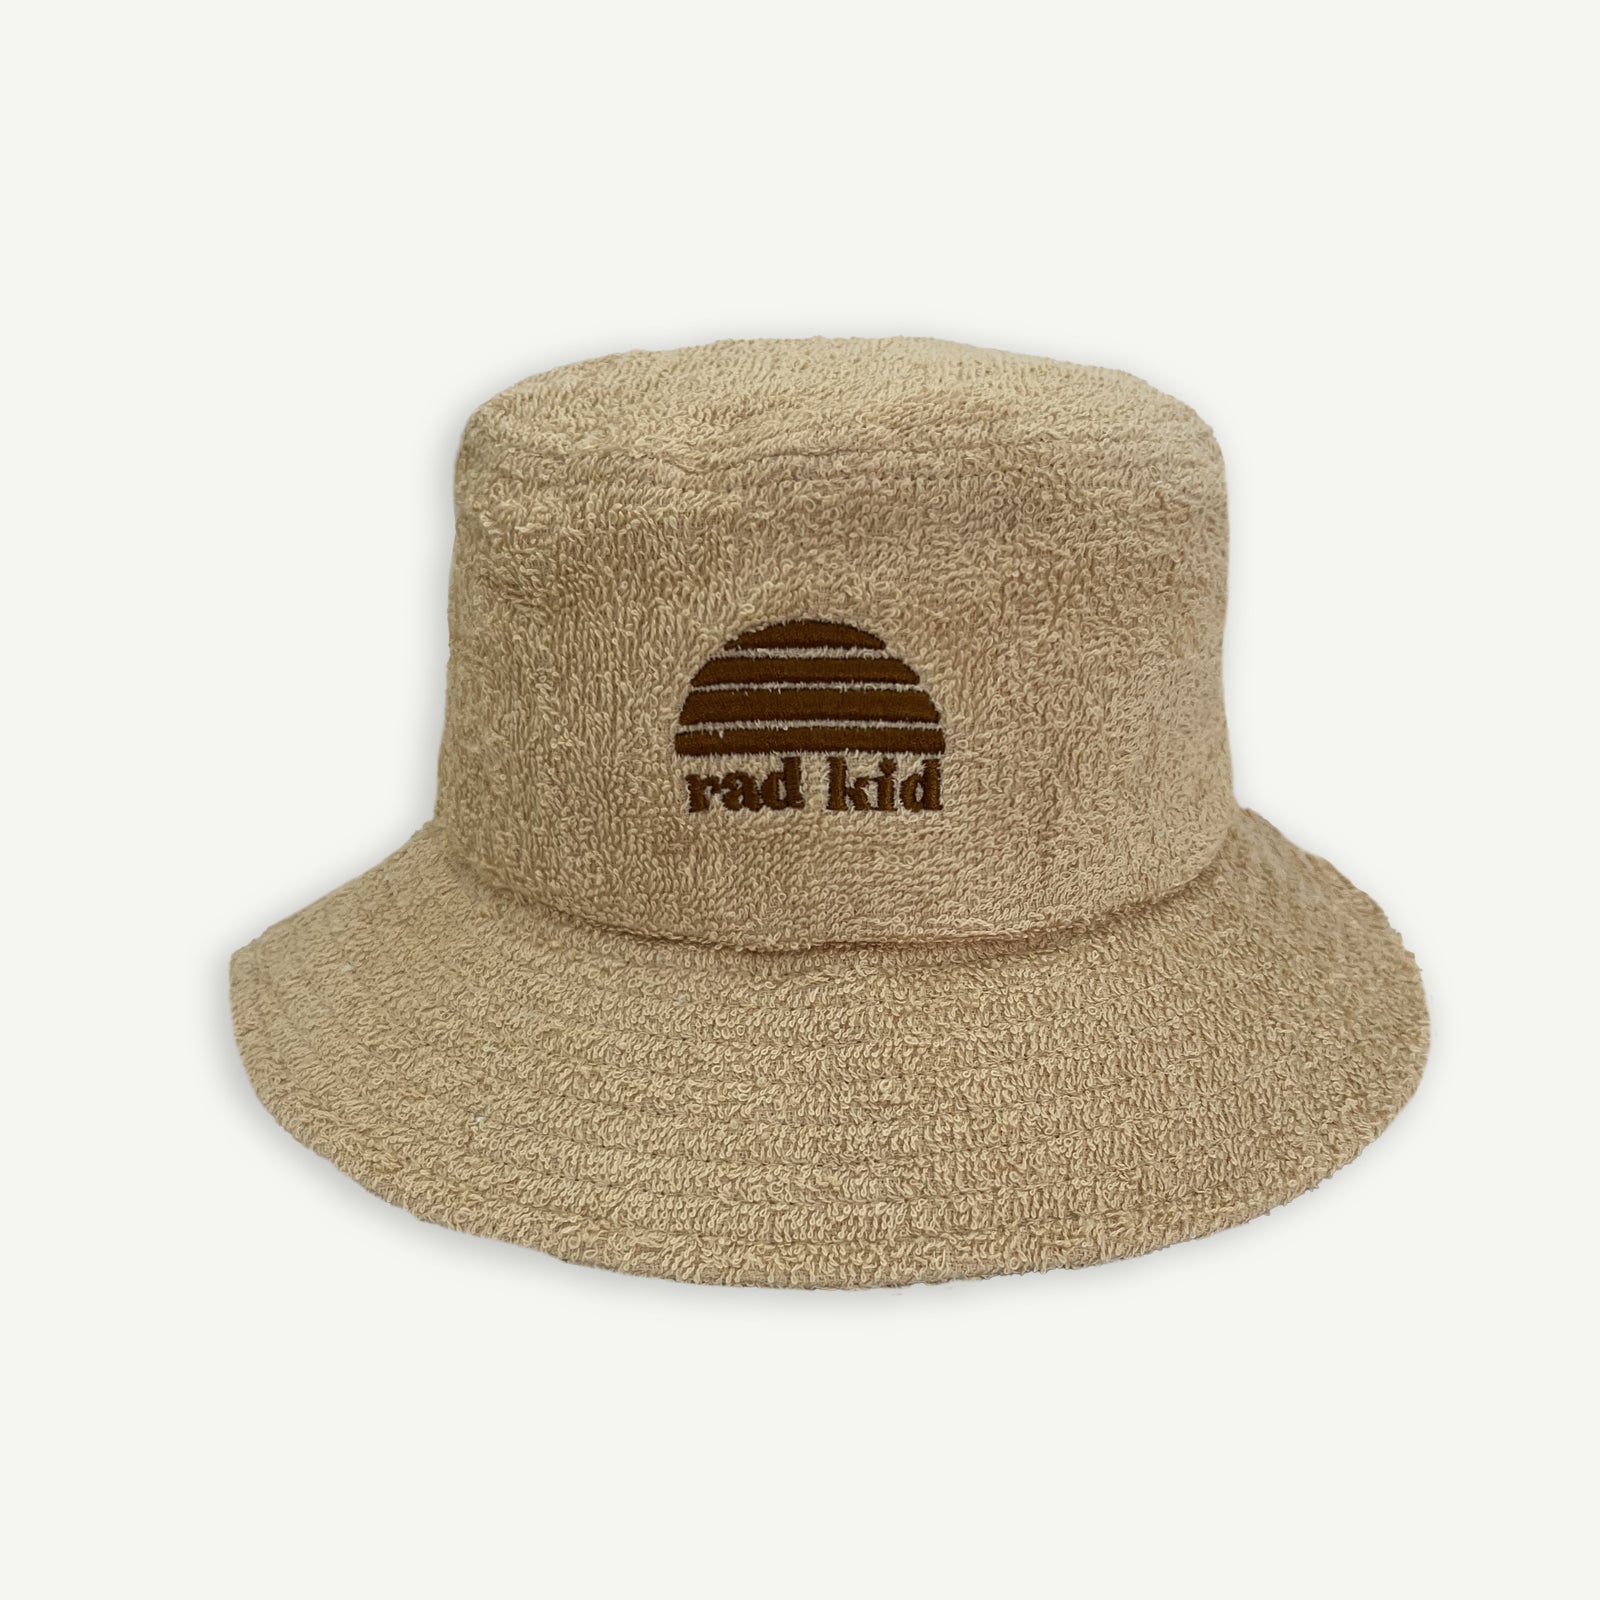 Rad Kid Terry Hat - Latte